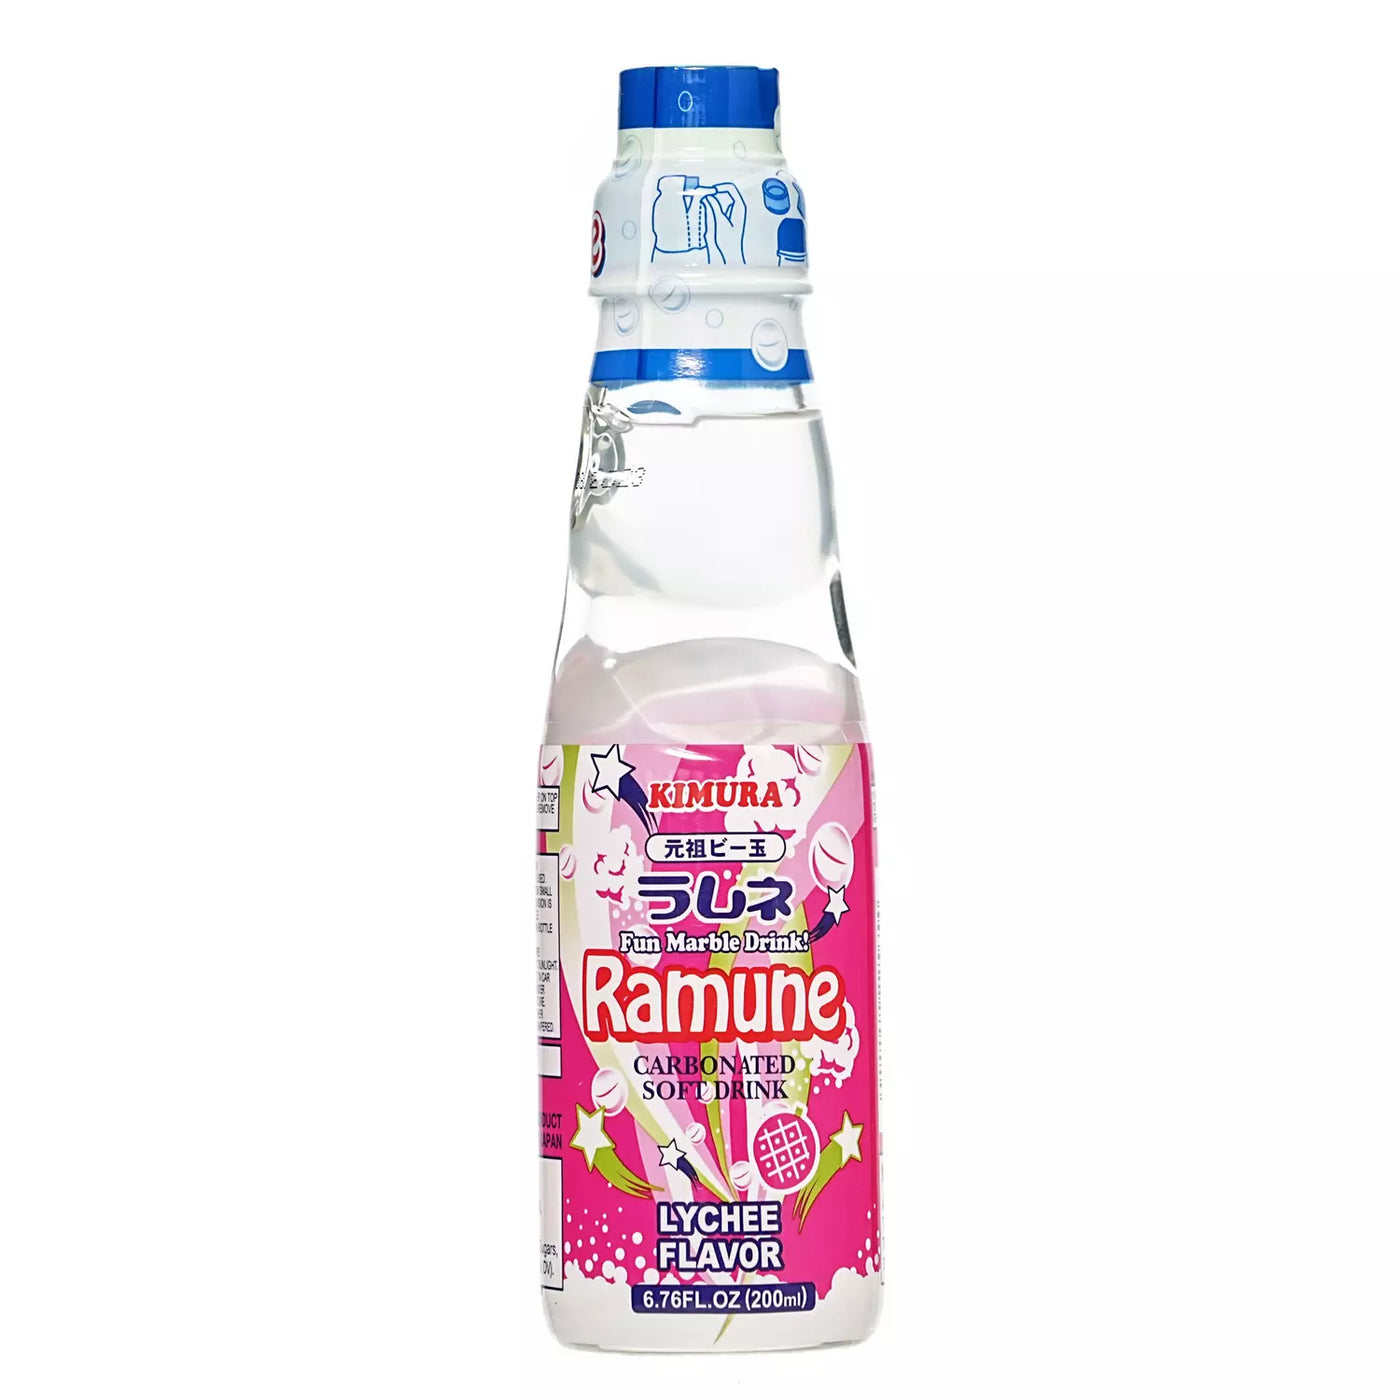 Kimura Ramune Soda Drink Lychee Flavour 200ml - stylecreep.com